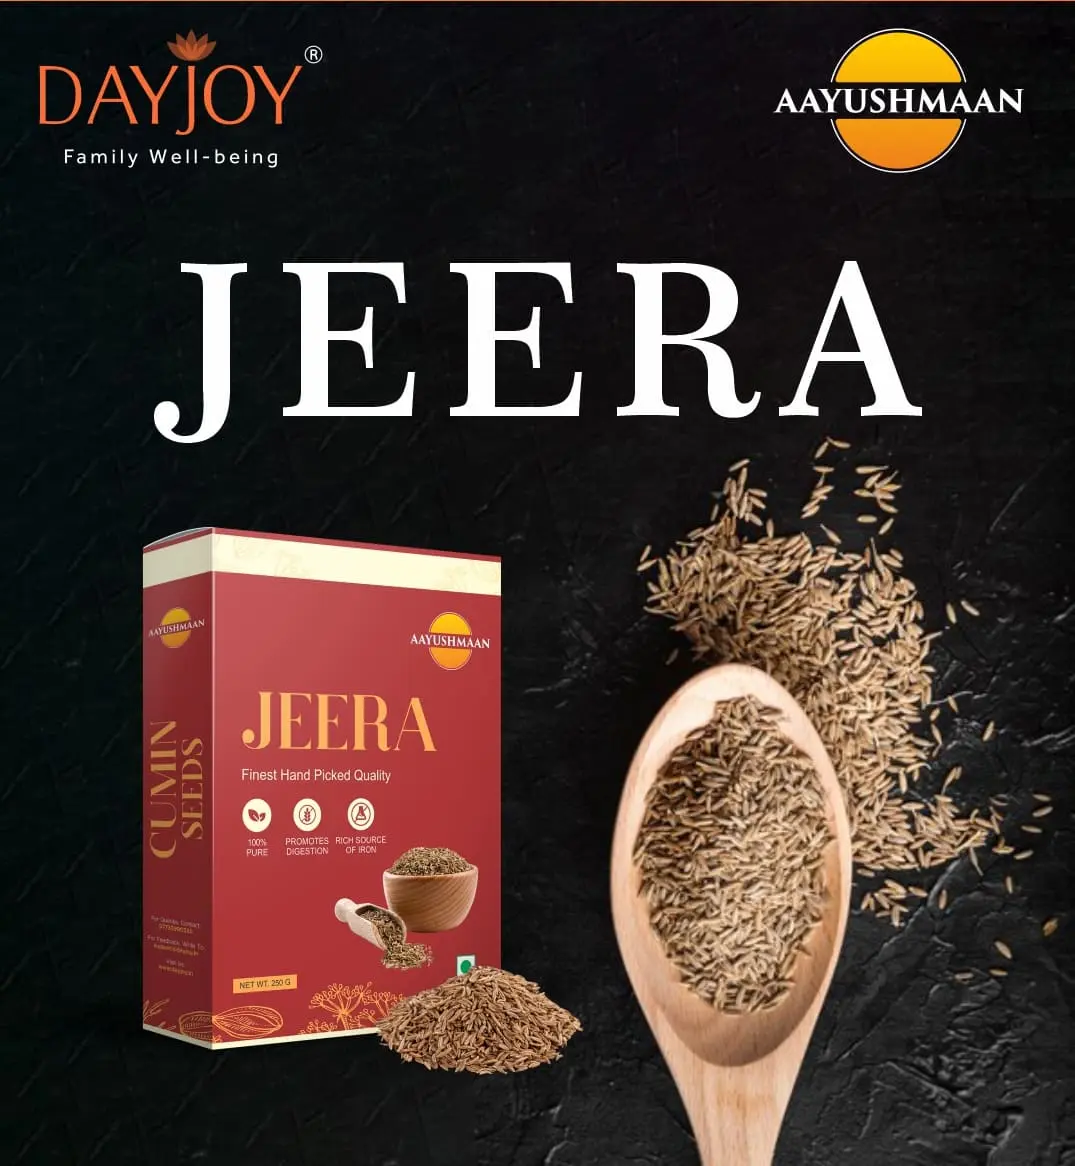 Aayushmaan Jeera- finest jeera seeds